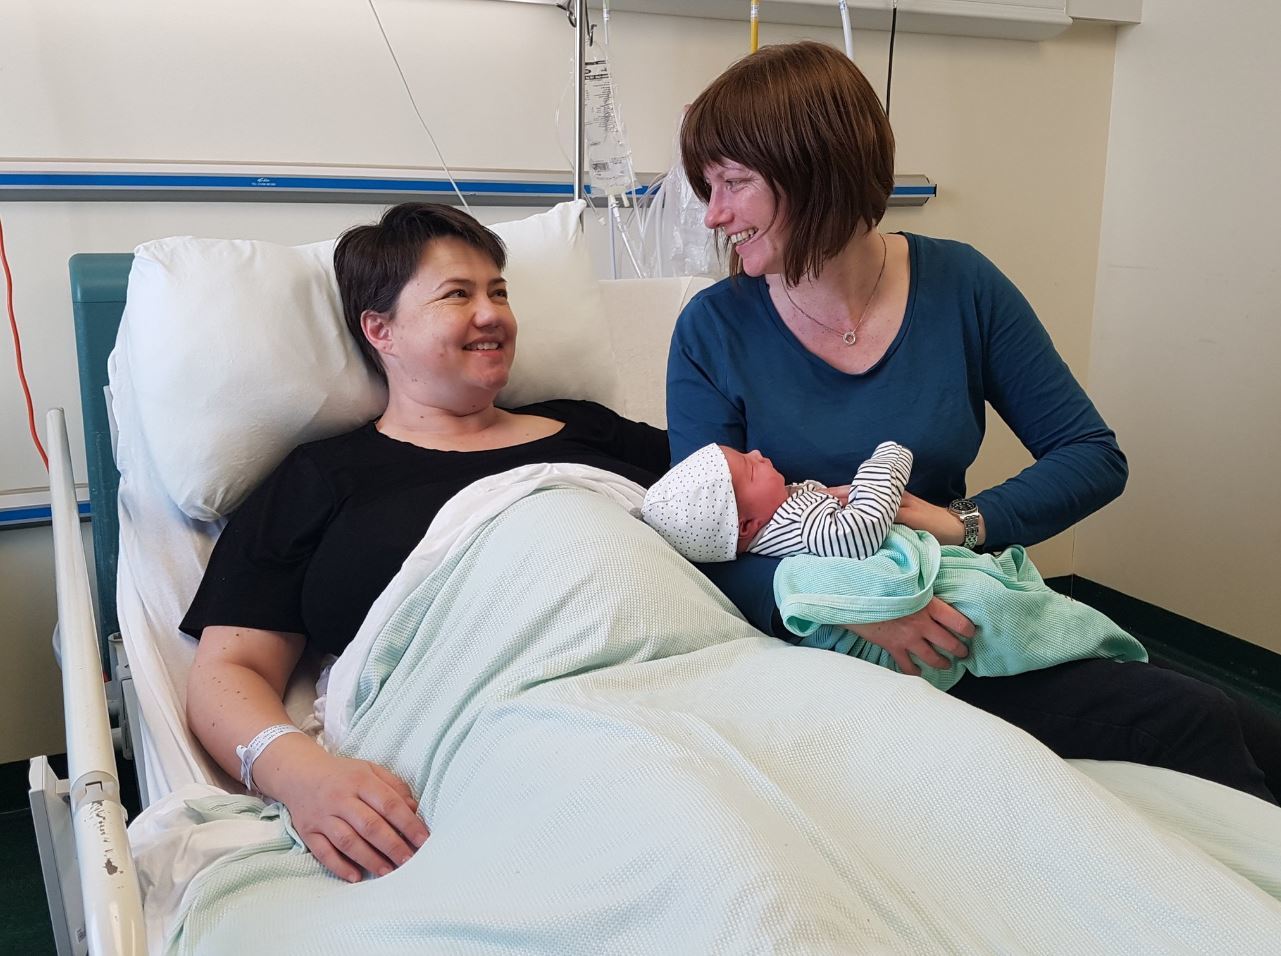 Ruth Davidson shared a photo on Twitter of her newborn son, Finn Paul Davidson, born today